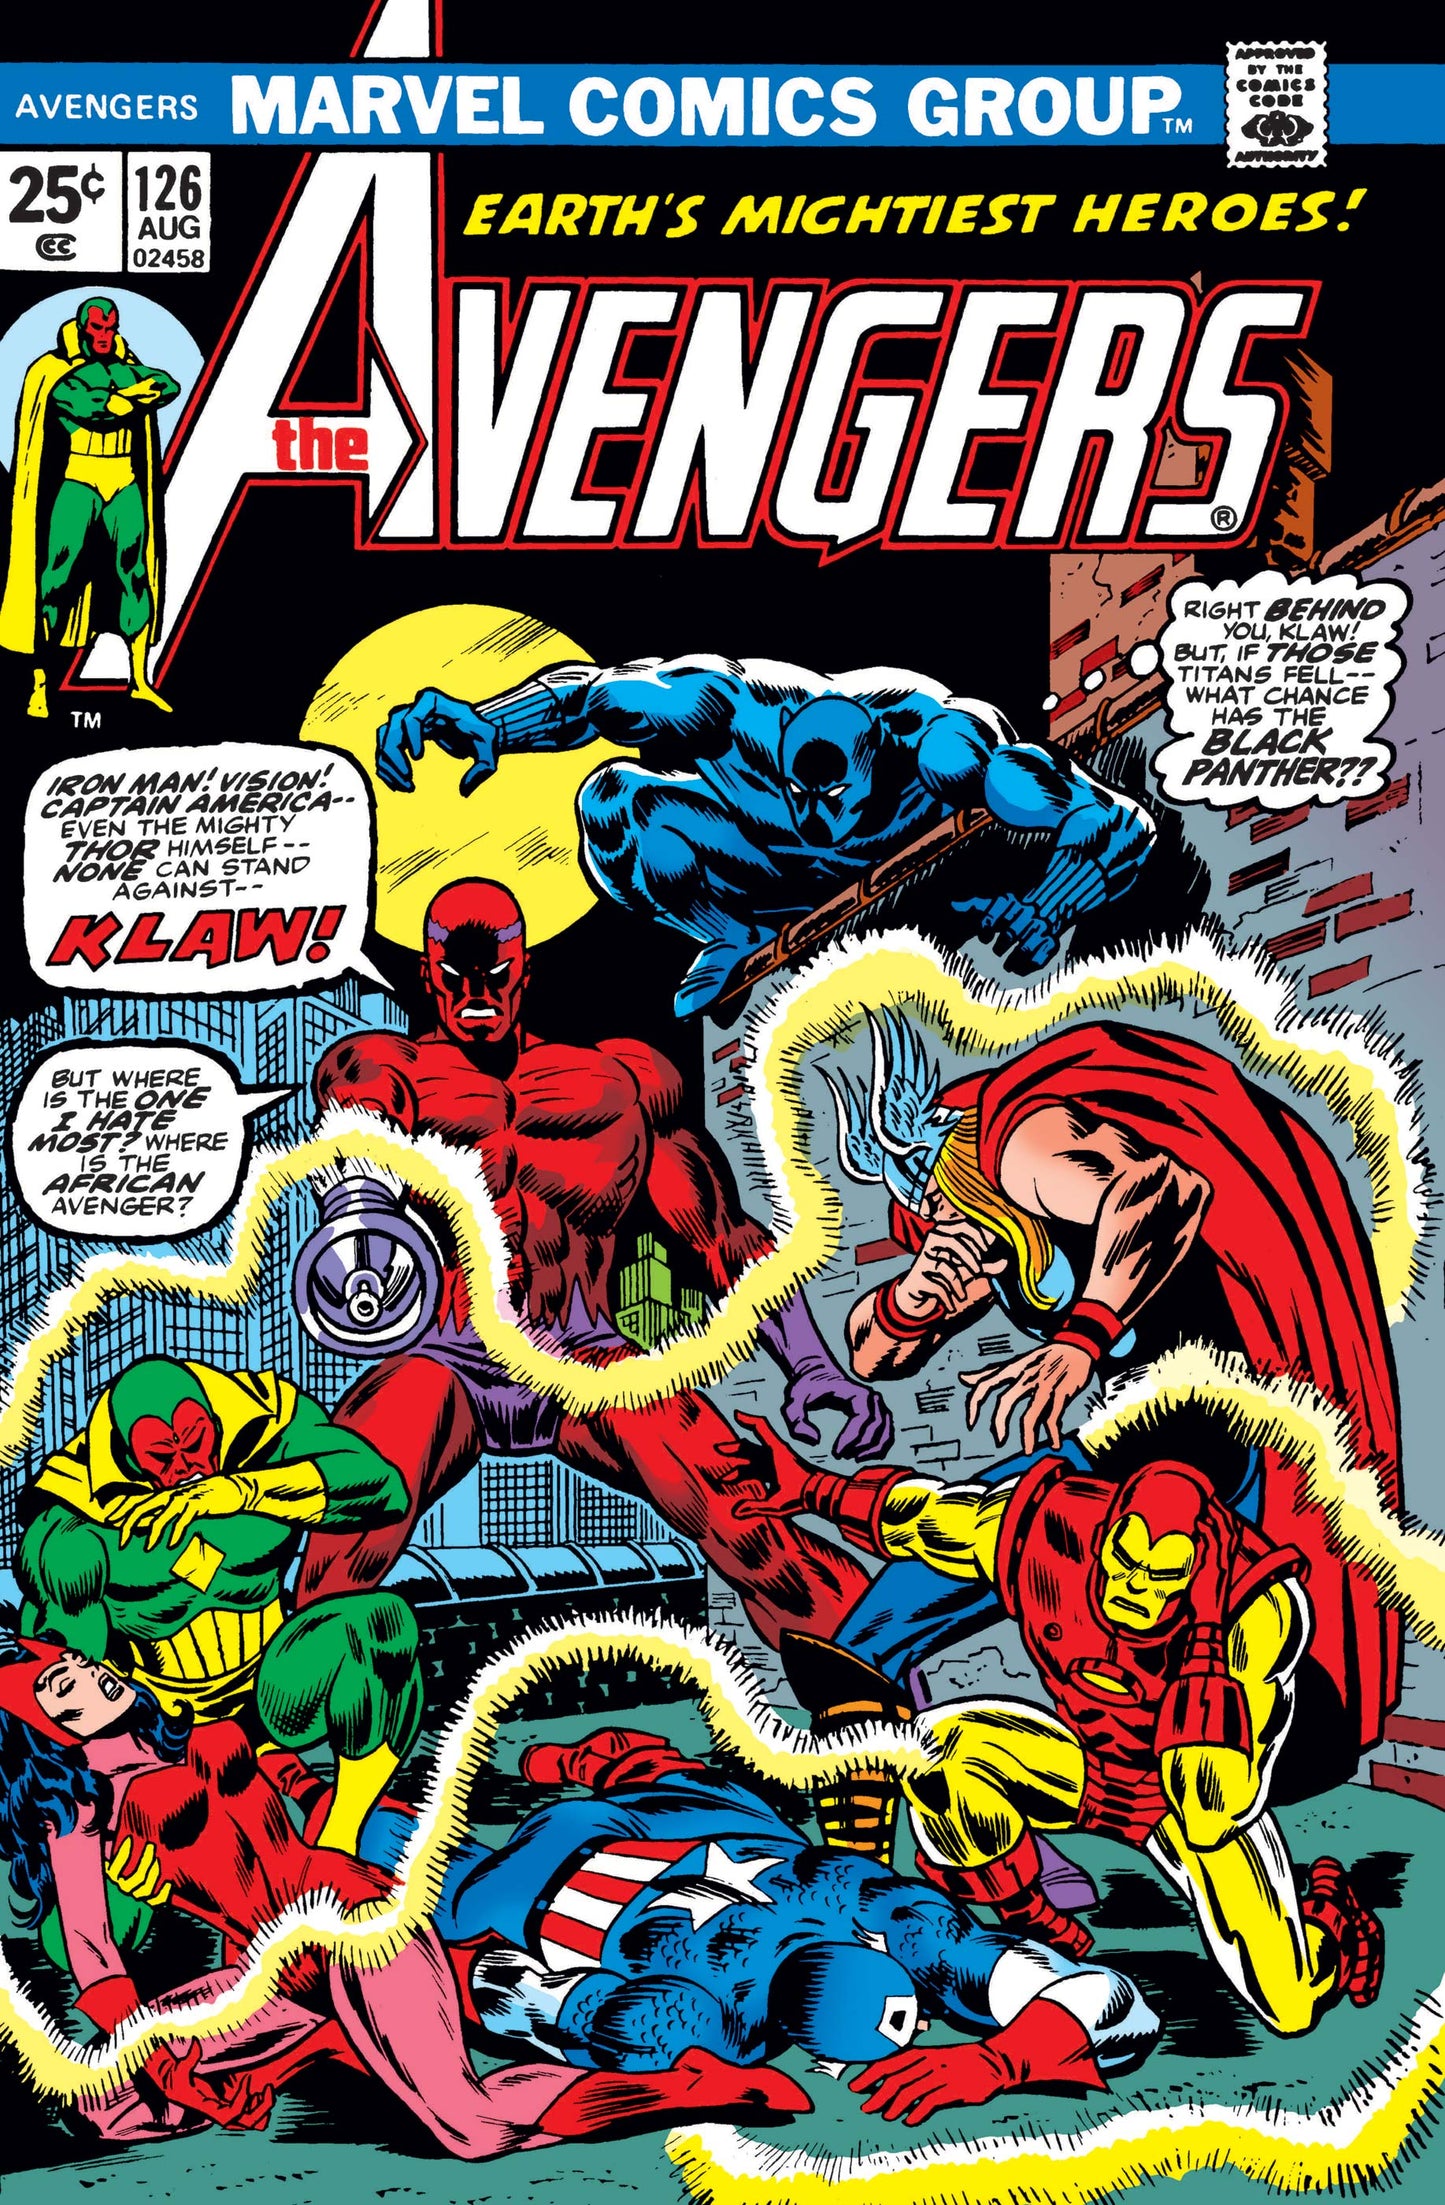 The Avengers #126